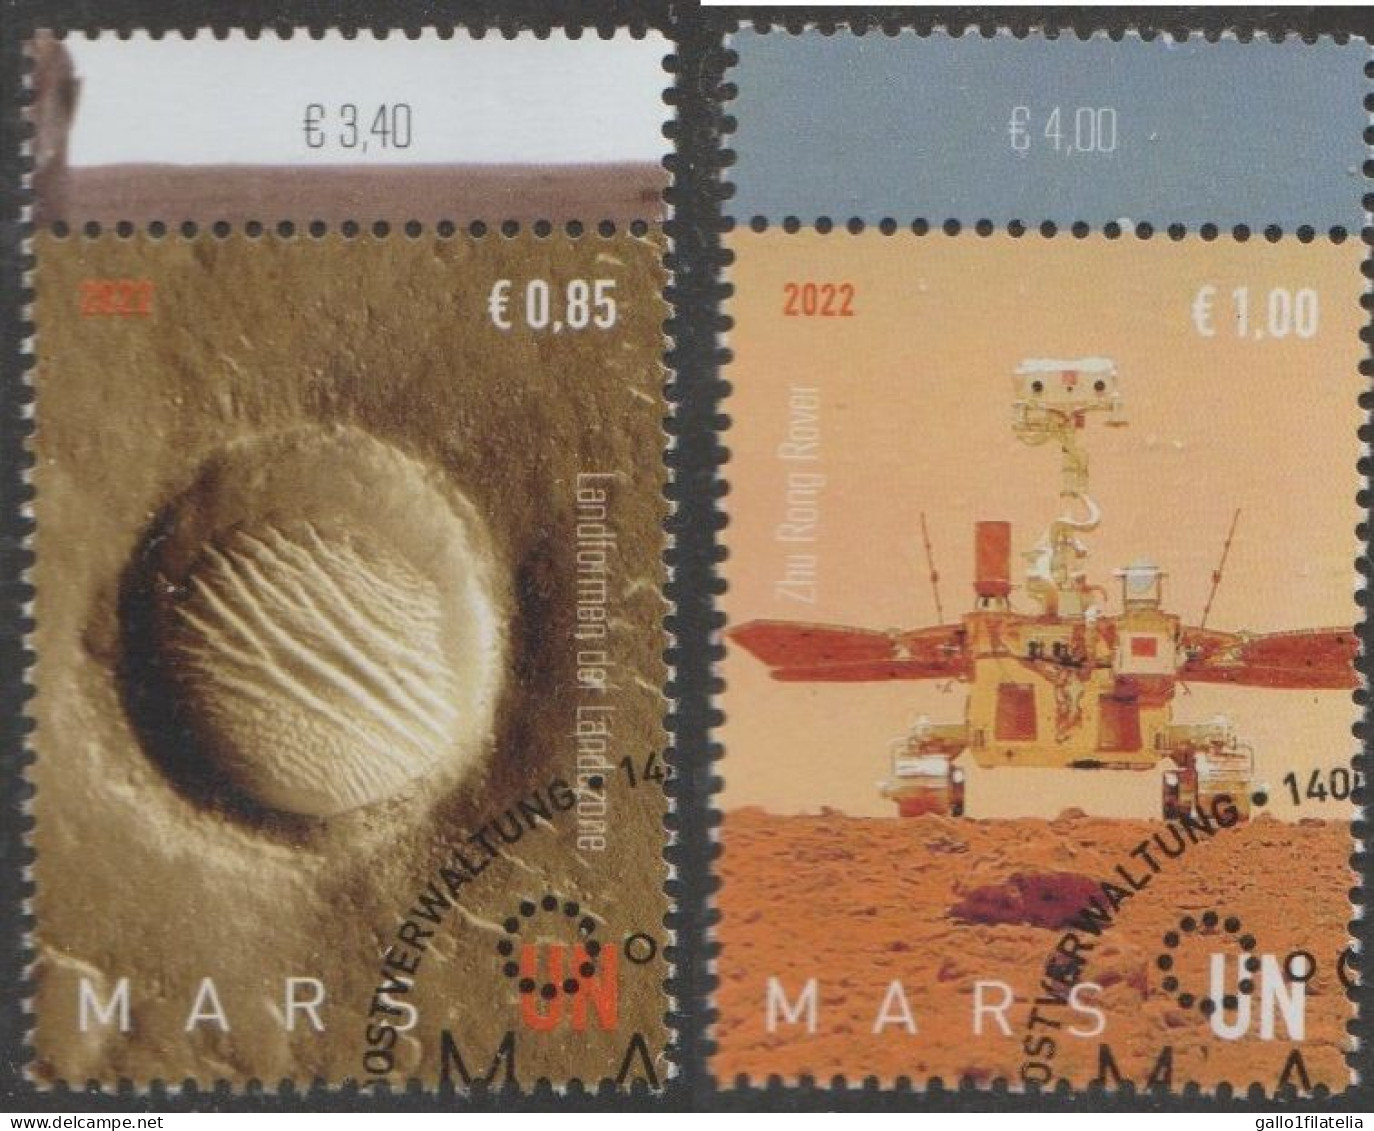 2022 - O.N.U. / UNITED NATIONS - VIENNA / WIEN - PIANETA MARTE / PLANET MARS. USATO - Used Stamps